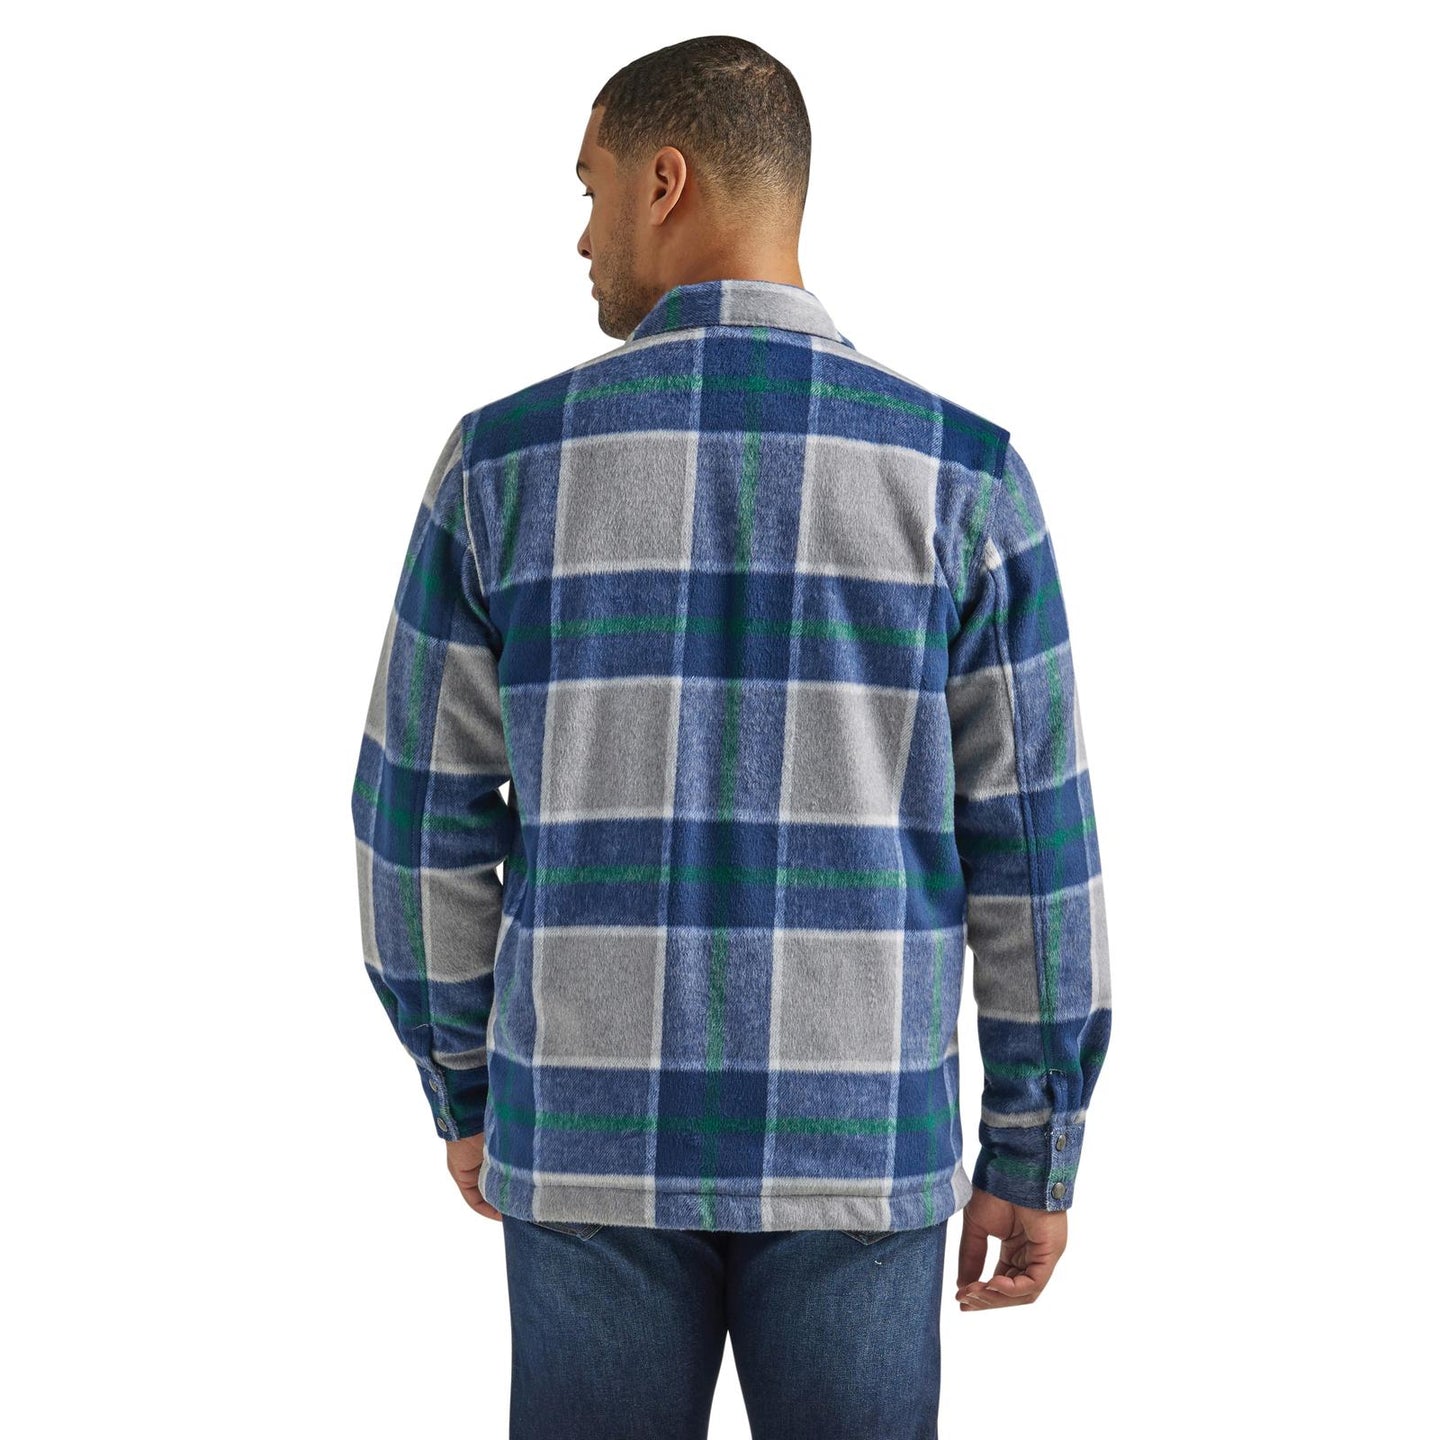 Wrangler Men's Flannel Sherpa Lined Barn Coat 112338647 Small